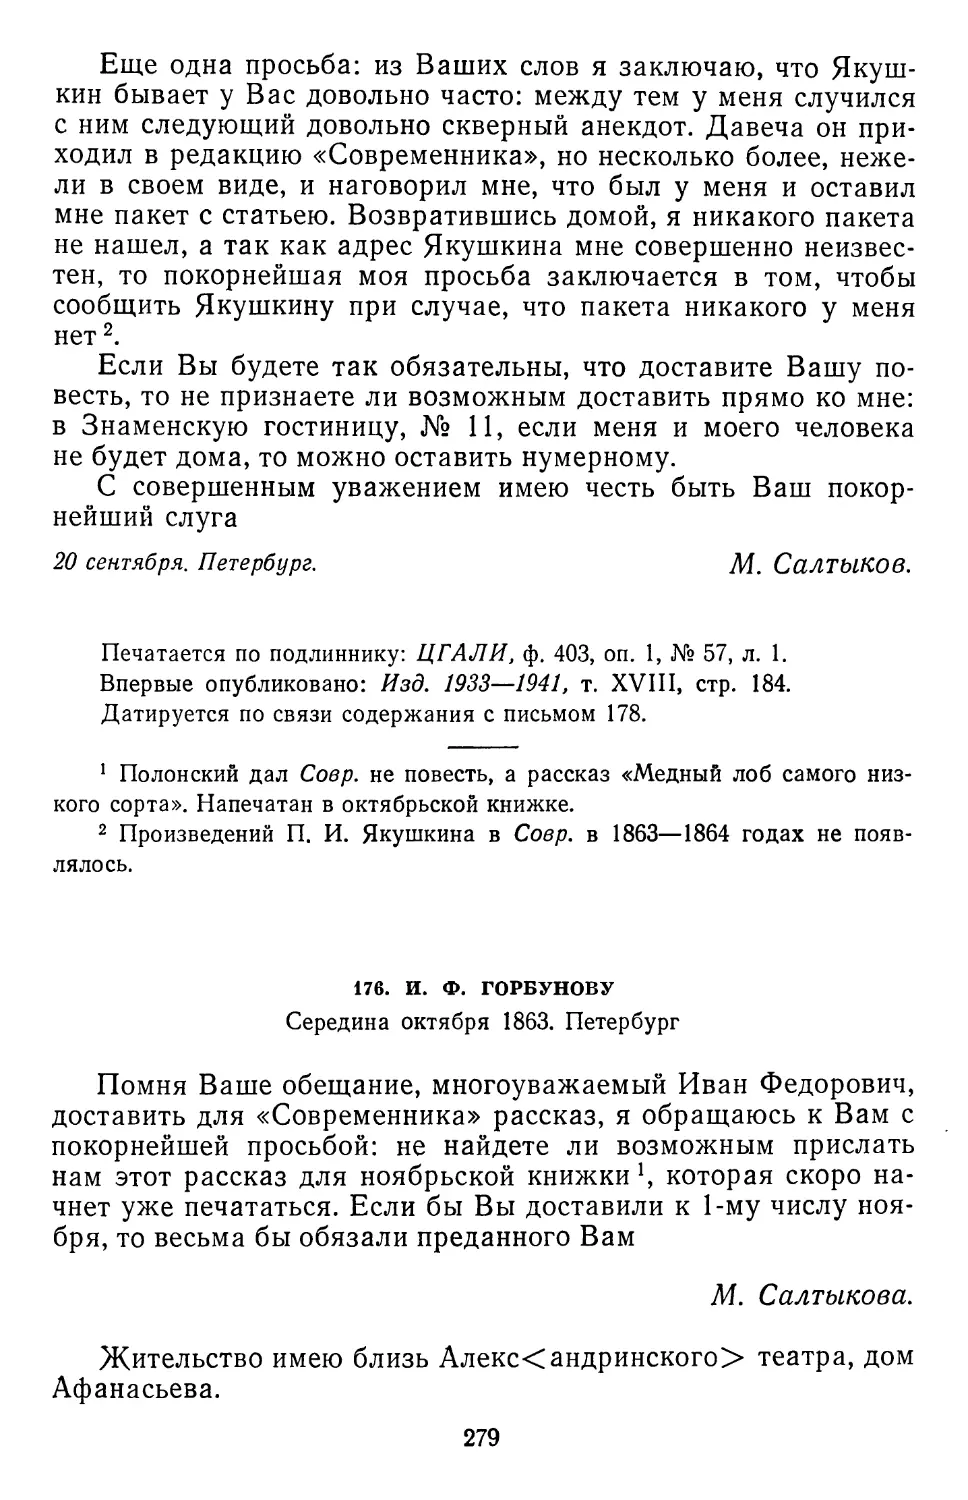 176.И. Ф.Горбунову. Середина октября 1863. Петербург